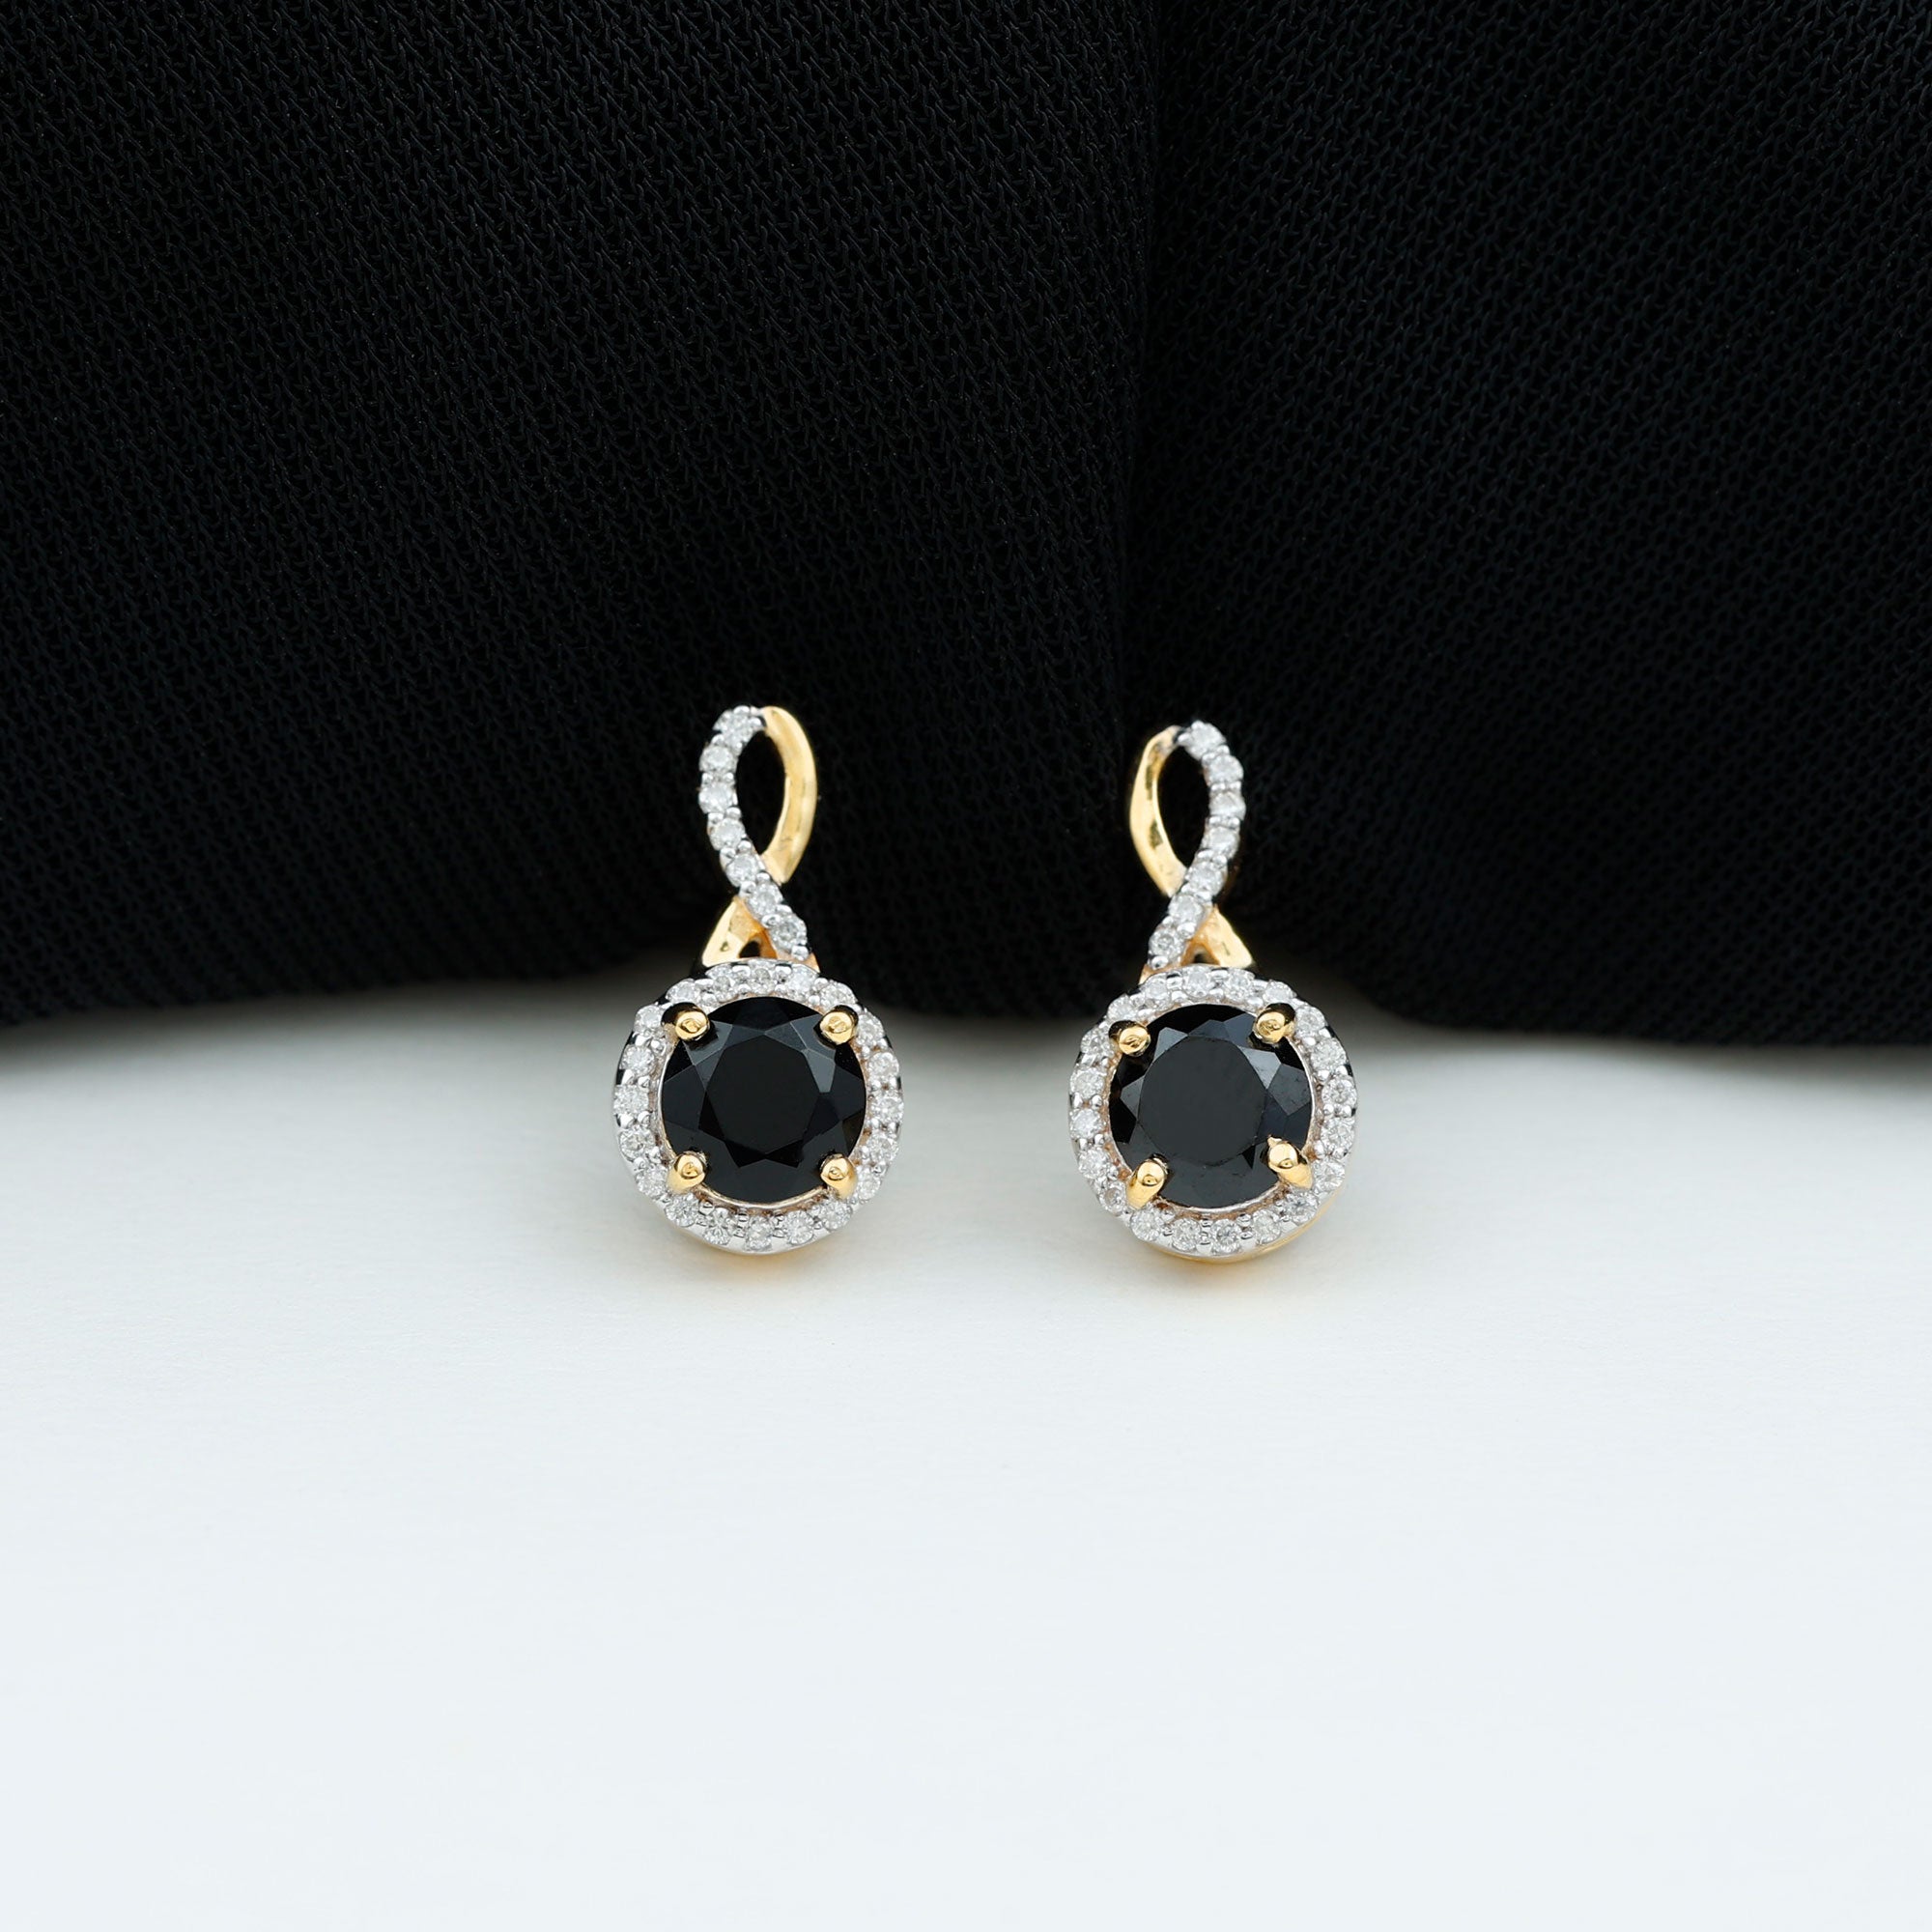 Lab Grown Black Diamond Minimal Infinity Stud Earrings with Diamond Lab Created Black Diamond - ( AAAA ) - Quality - Rosec Jewels